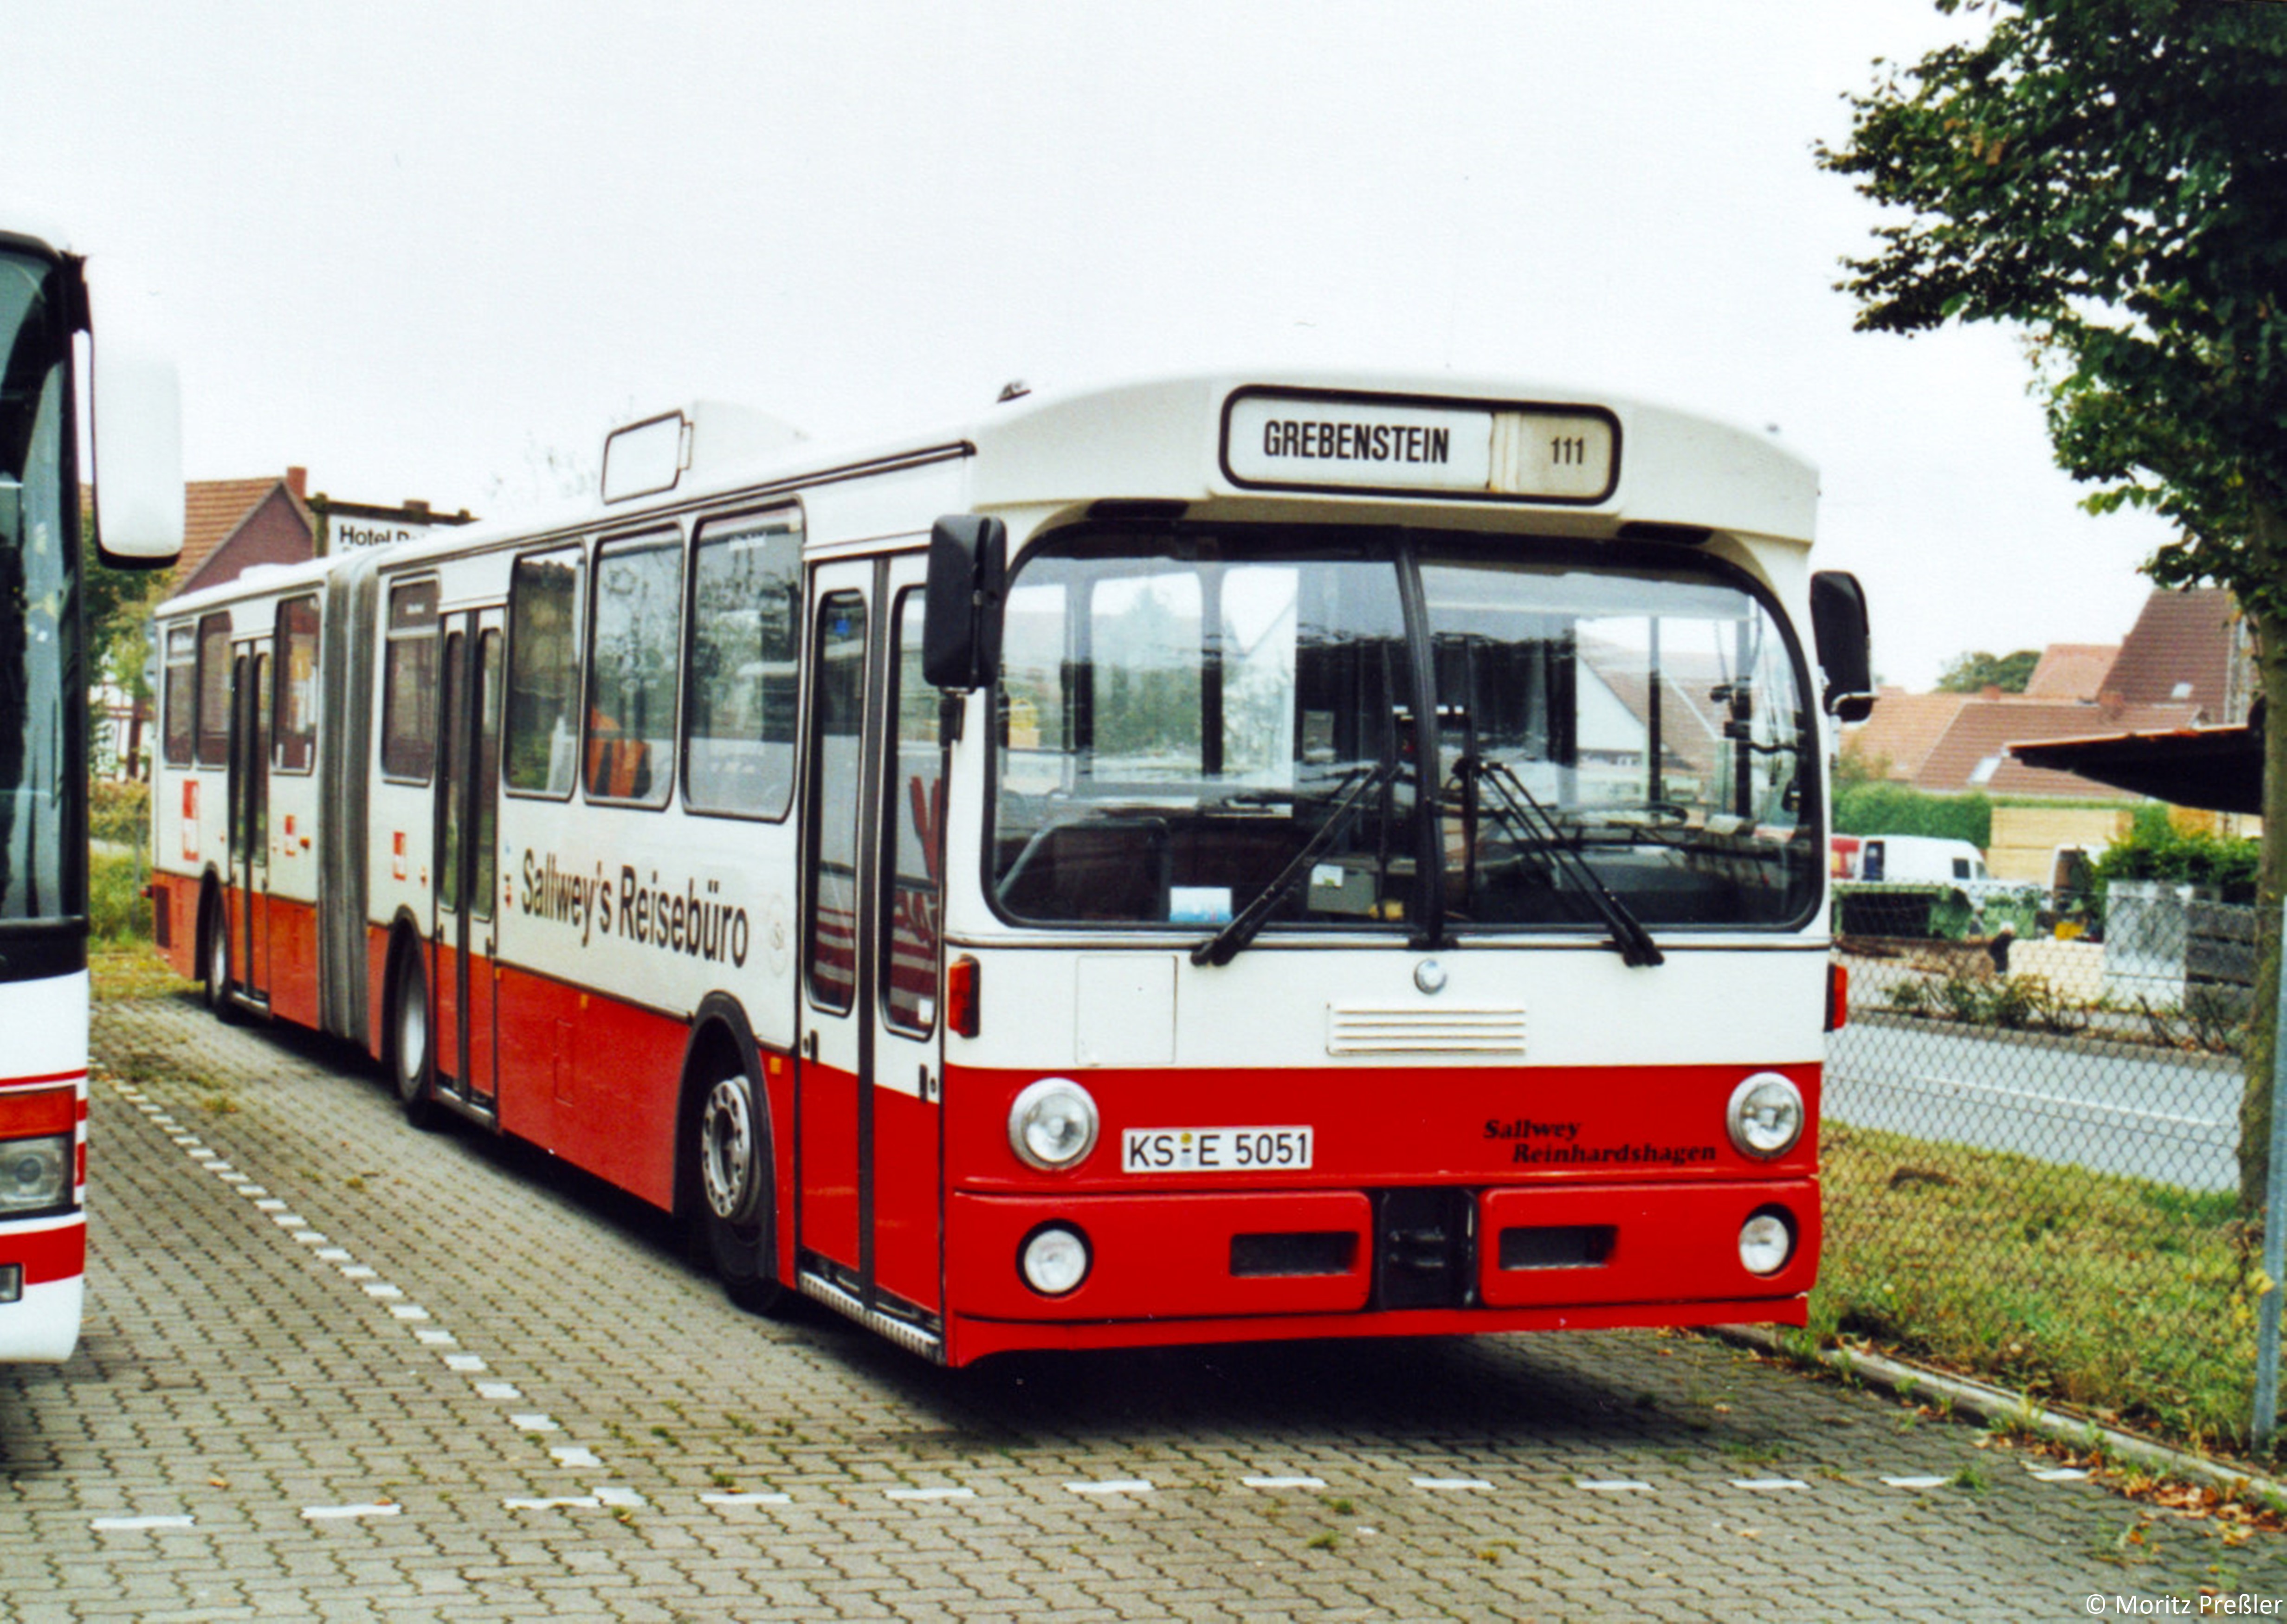 KS-E 5051 Omnibusbetrieb Sallwey ausgemustert